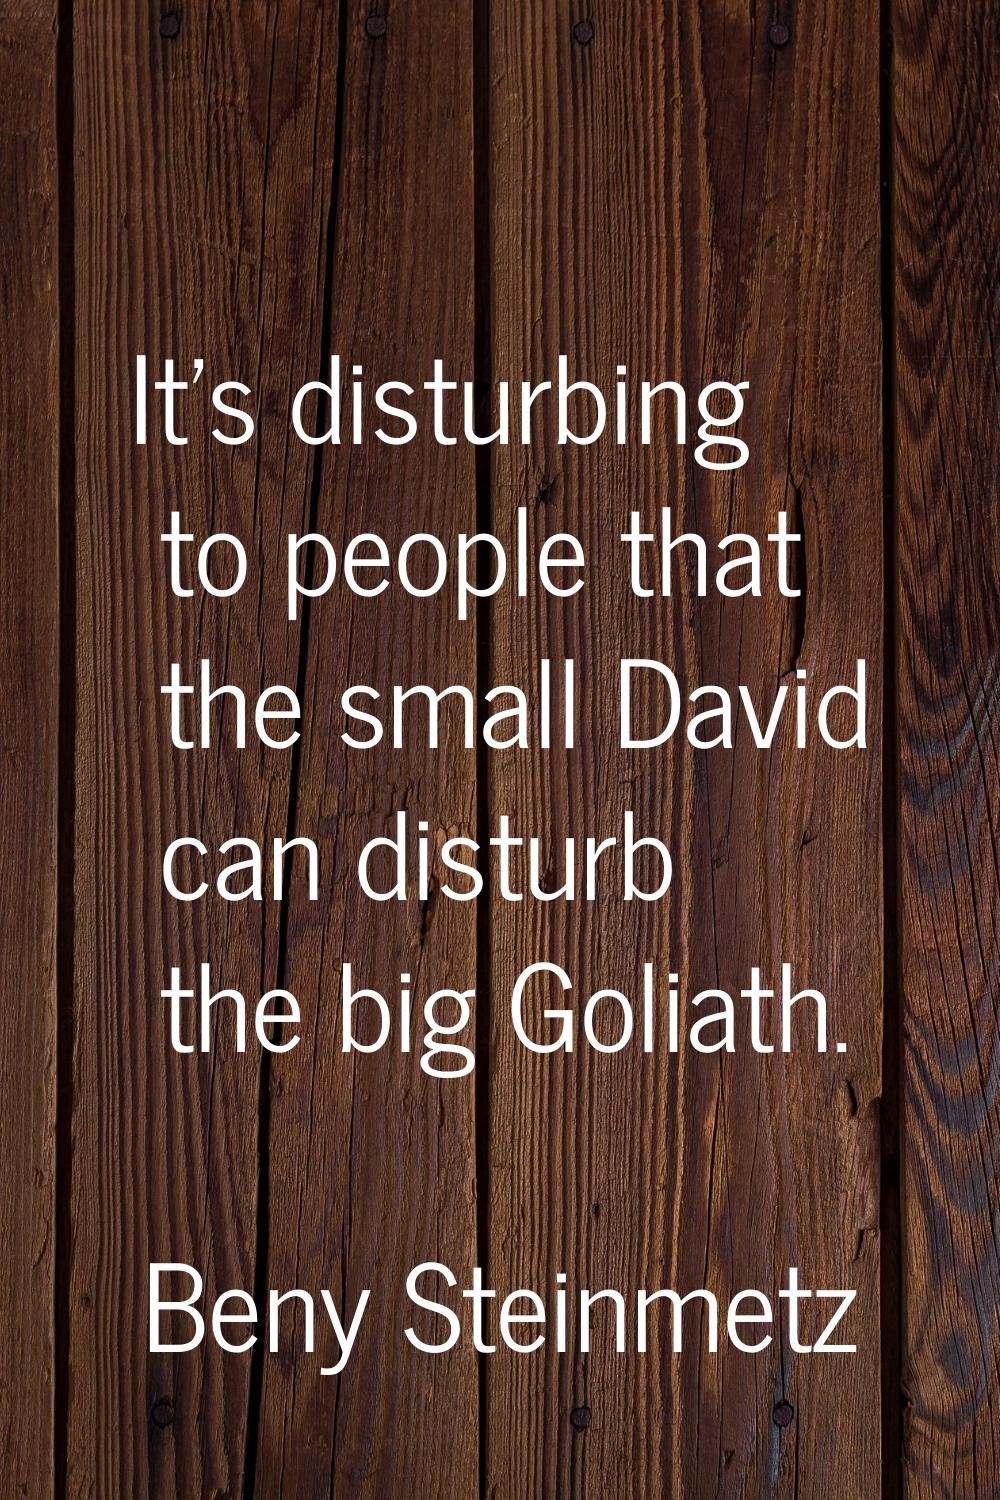 It's disturbing to people that the small David can disturb the big Goliath.